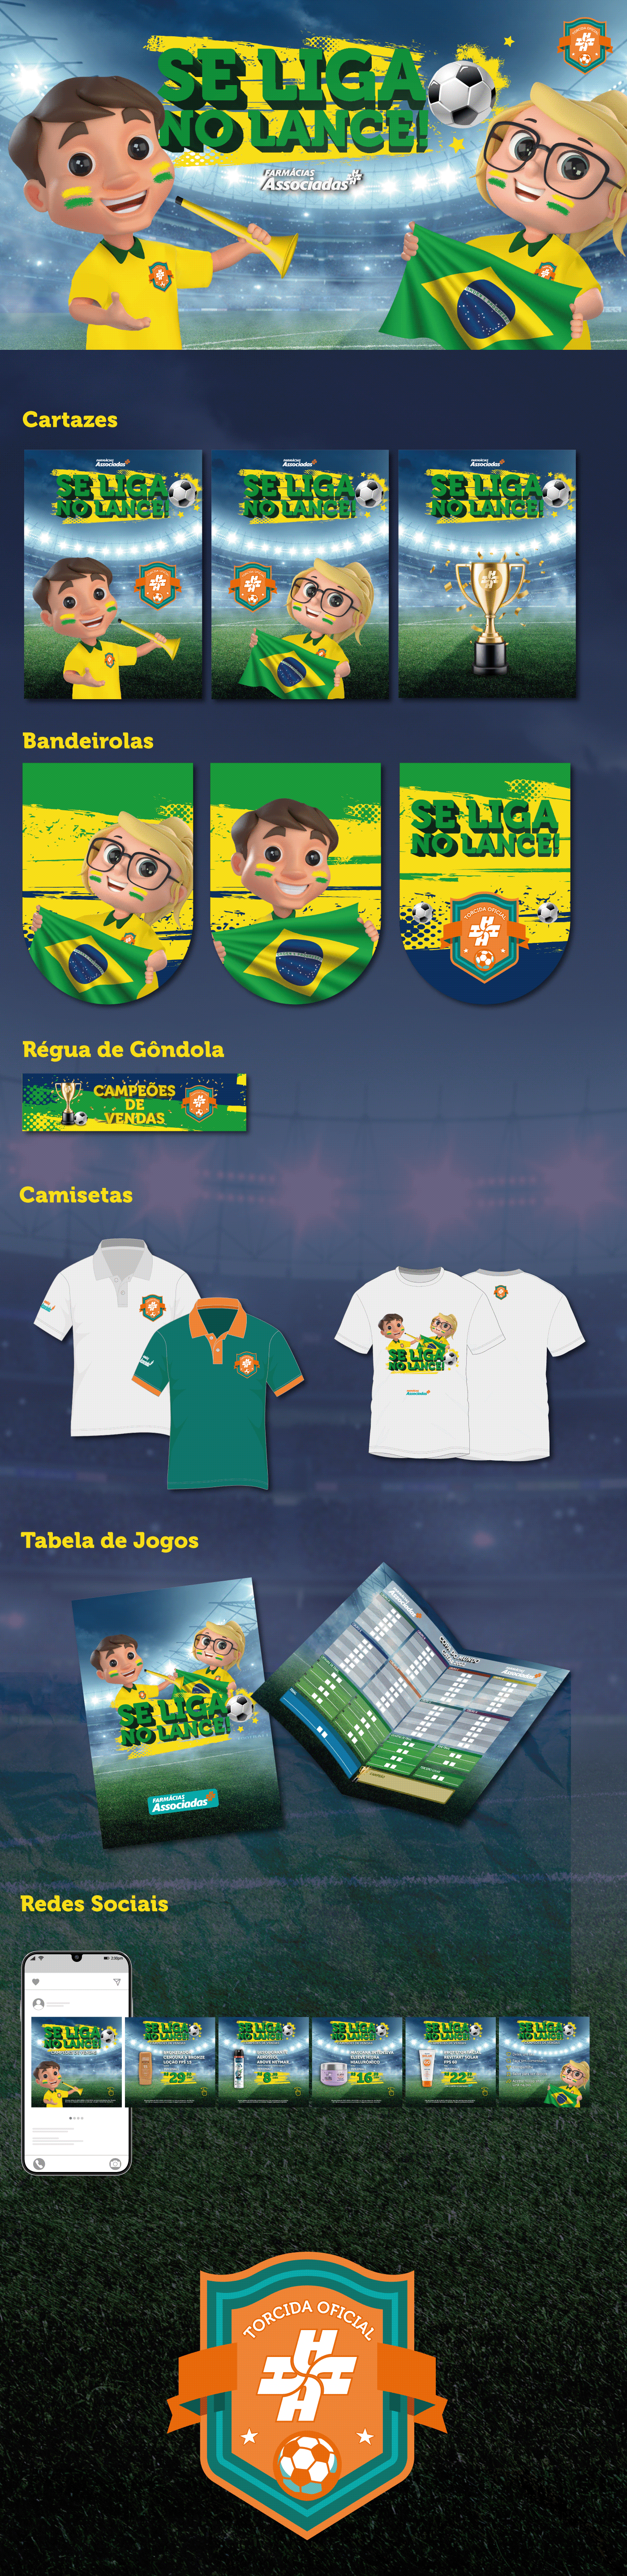 Brasil copa do mundo farmacia futebol